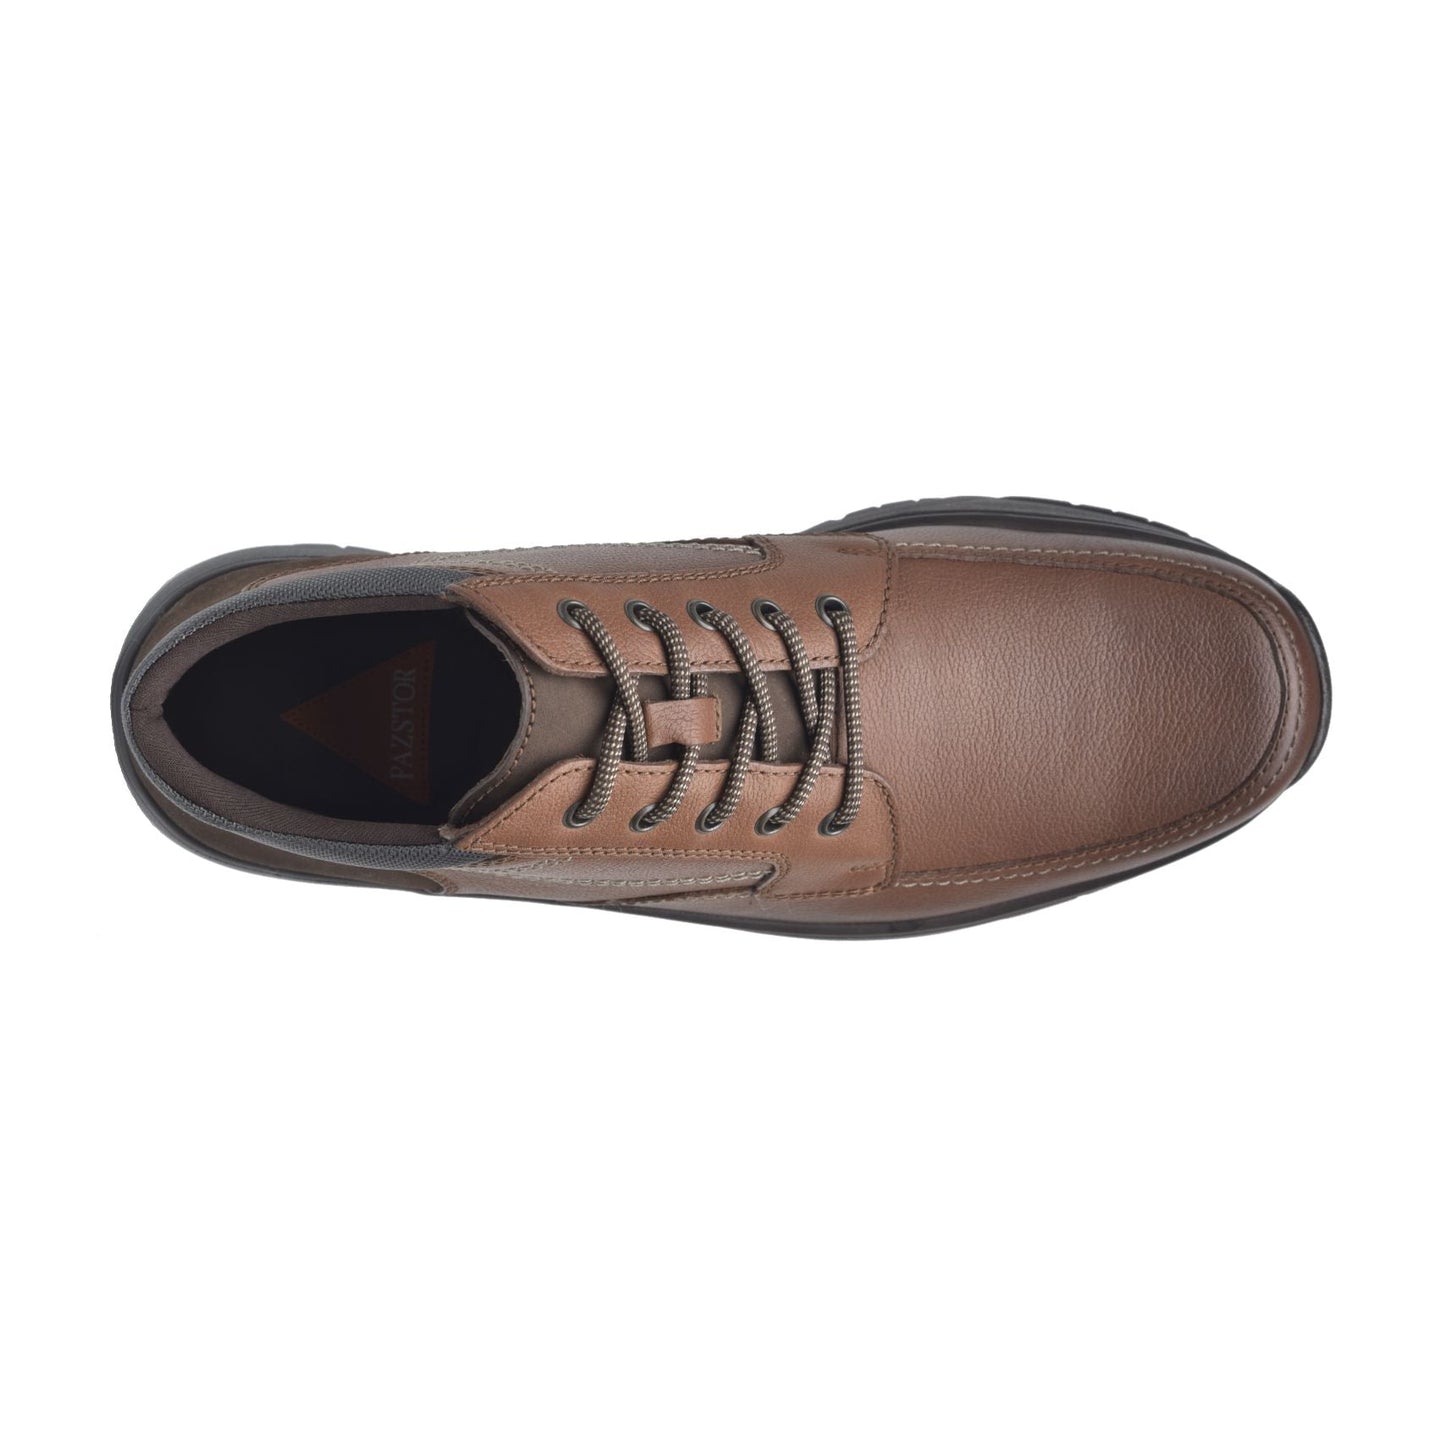 Premium comfort boots for men leather pazstor